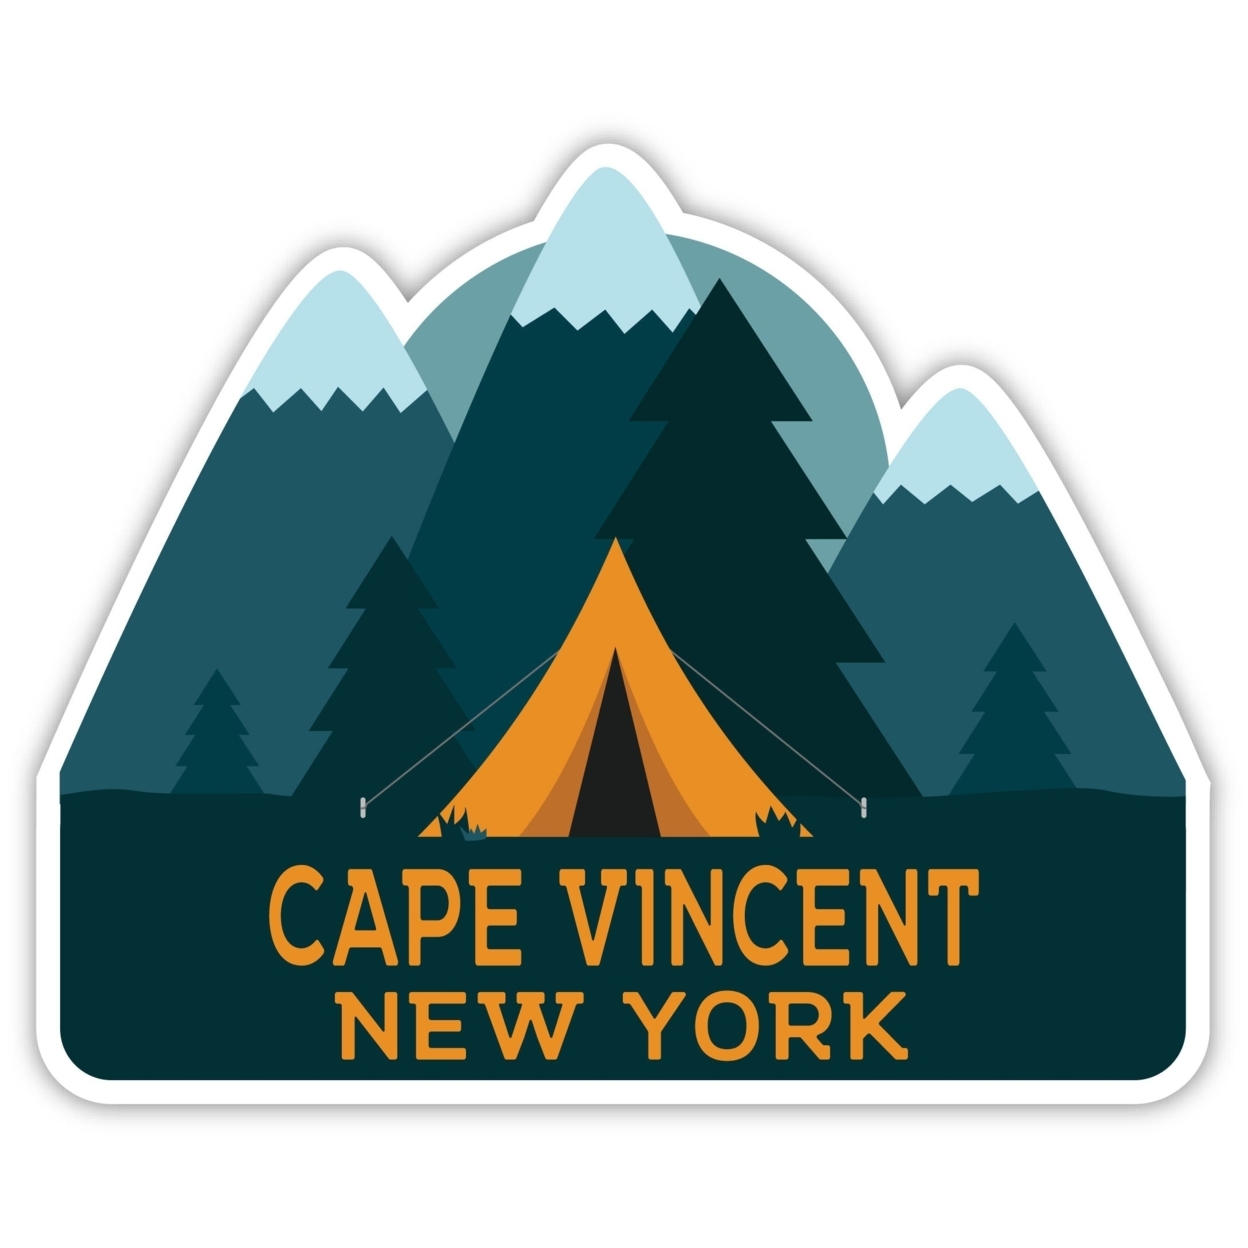 Cape Vincent New York Souvenir Decorative Stickers (Choose Theme And Size) - 4-Pack, 4-Inch, Tent